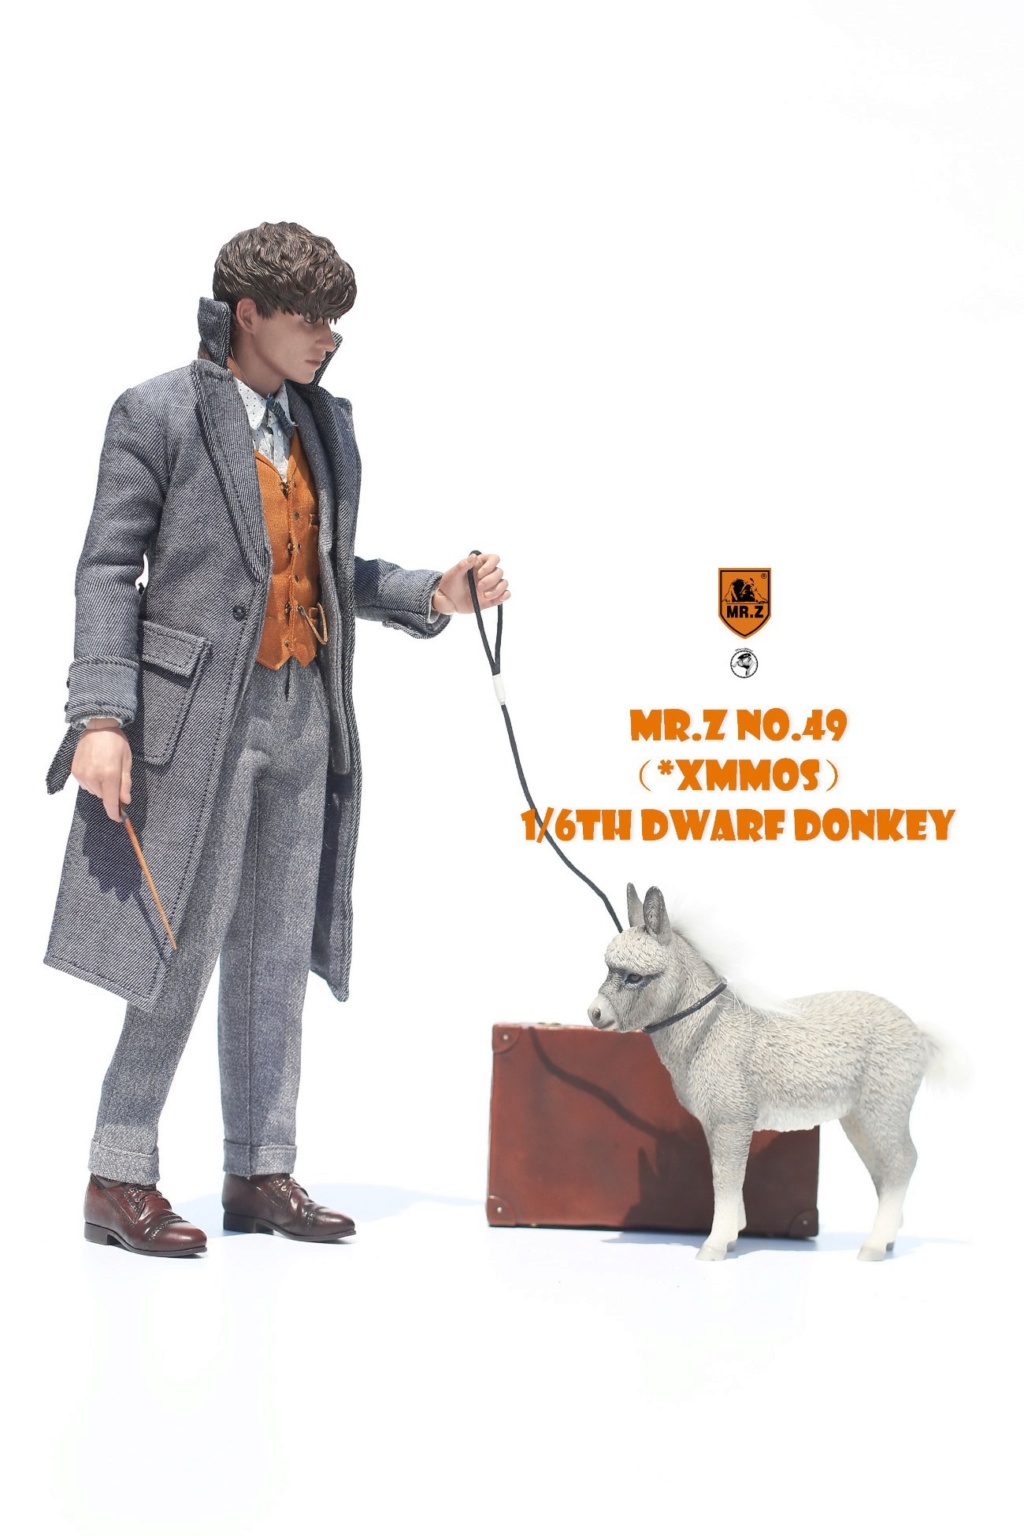 Mr - NEW PRODUCT: Mr. Z: 1/6 Dwarf Donkey simulation animal 49th-6 colors 16163112